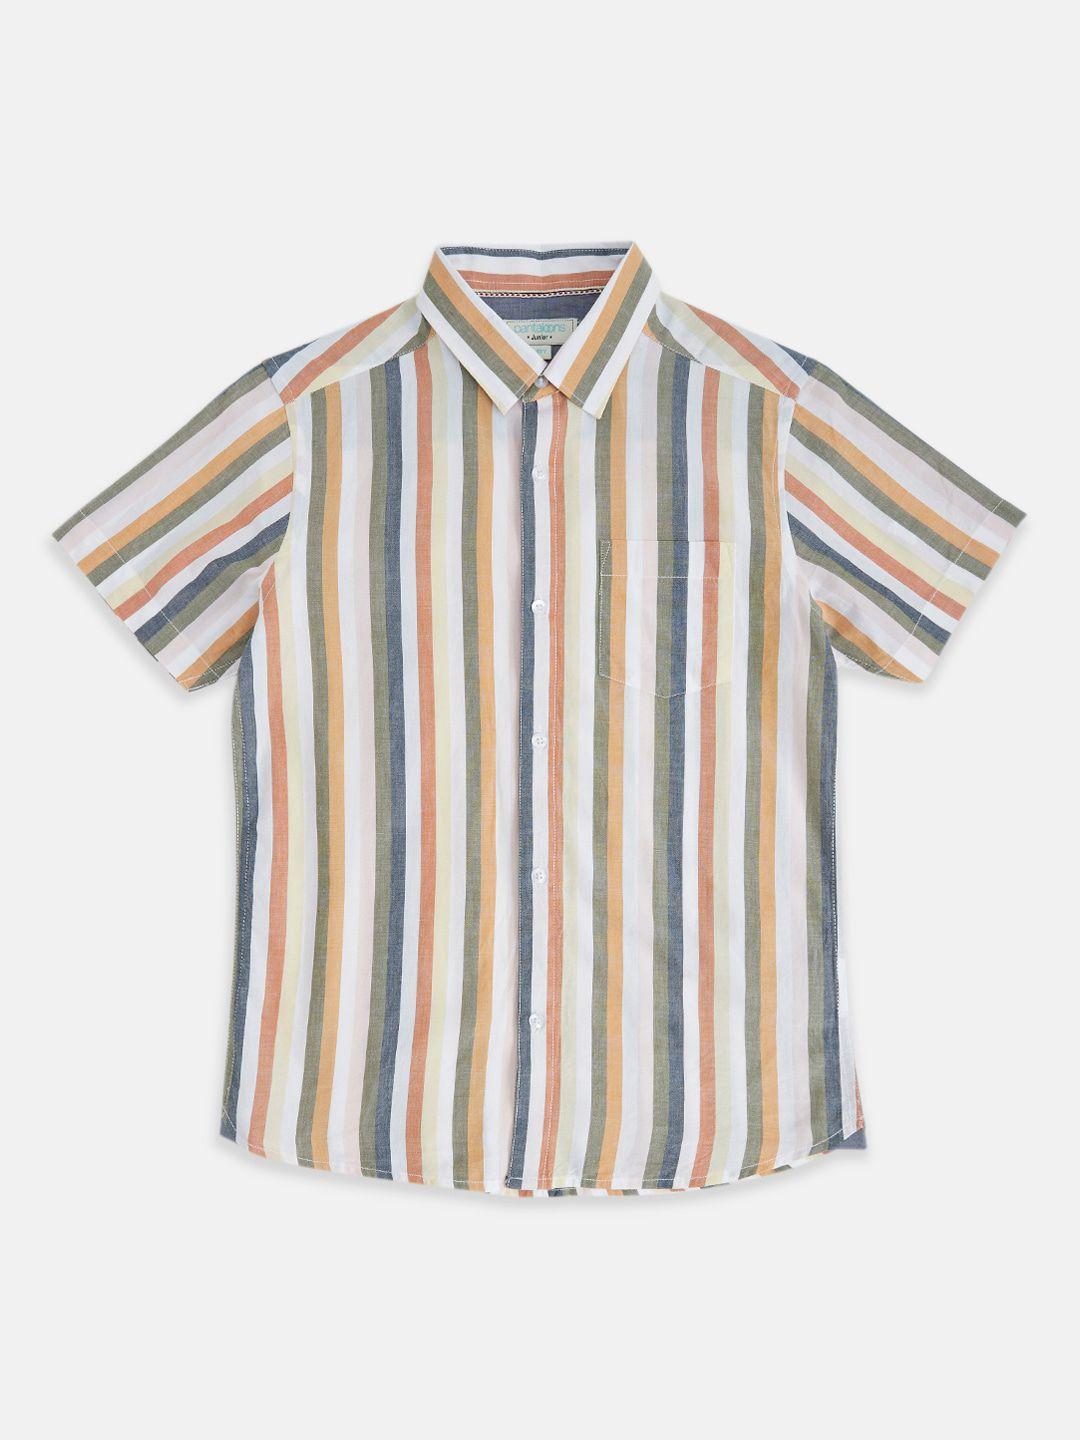 pantaloons junior boys cotton striped casual shirt